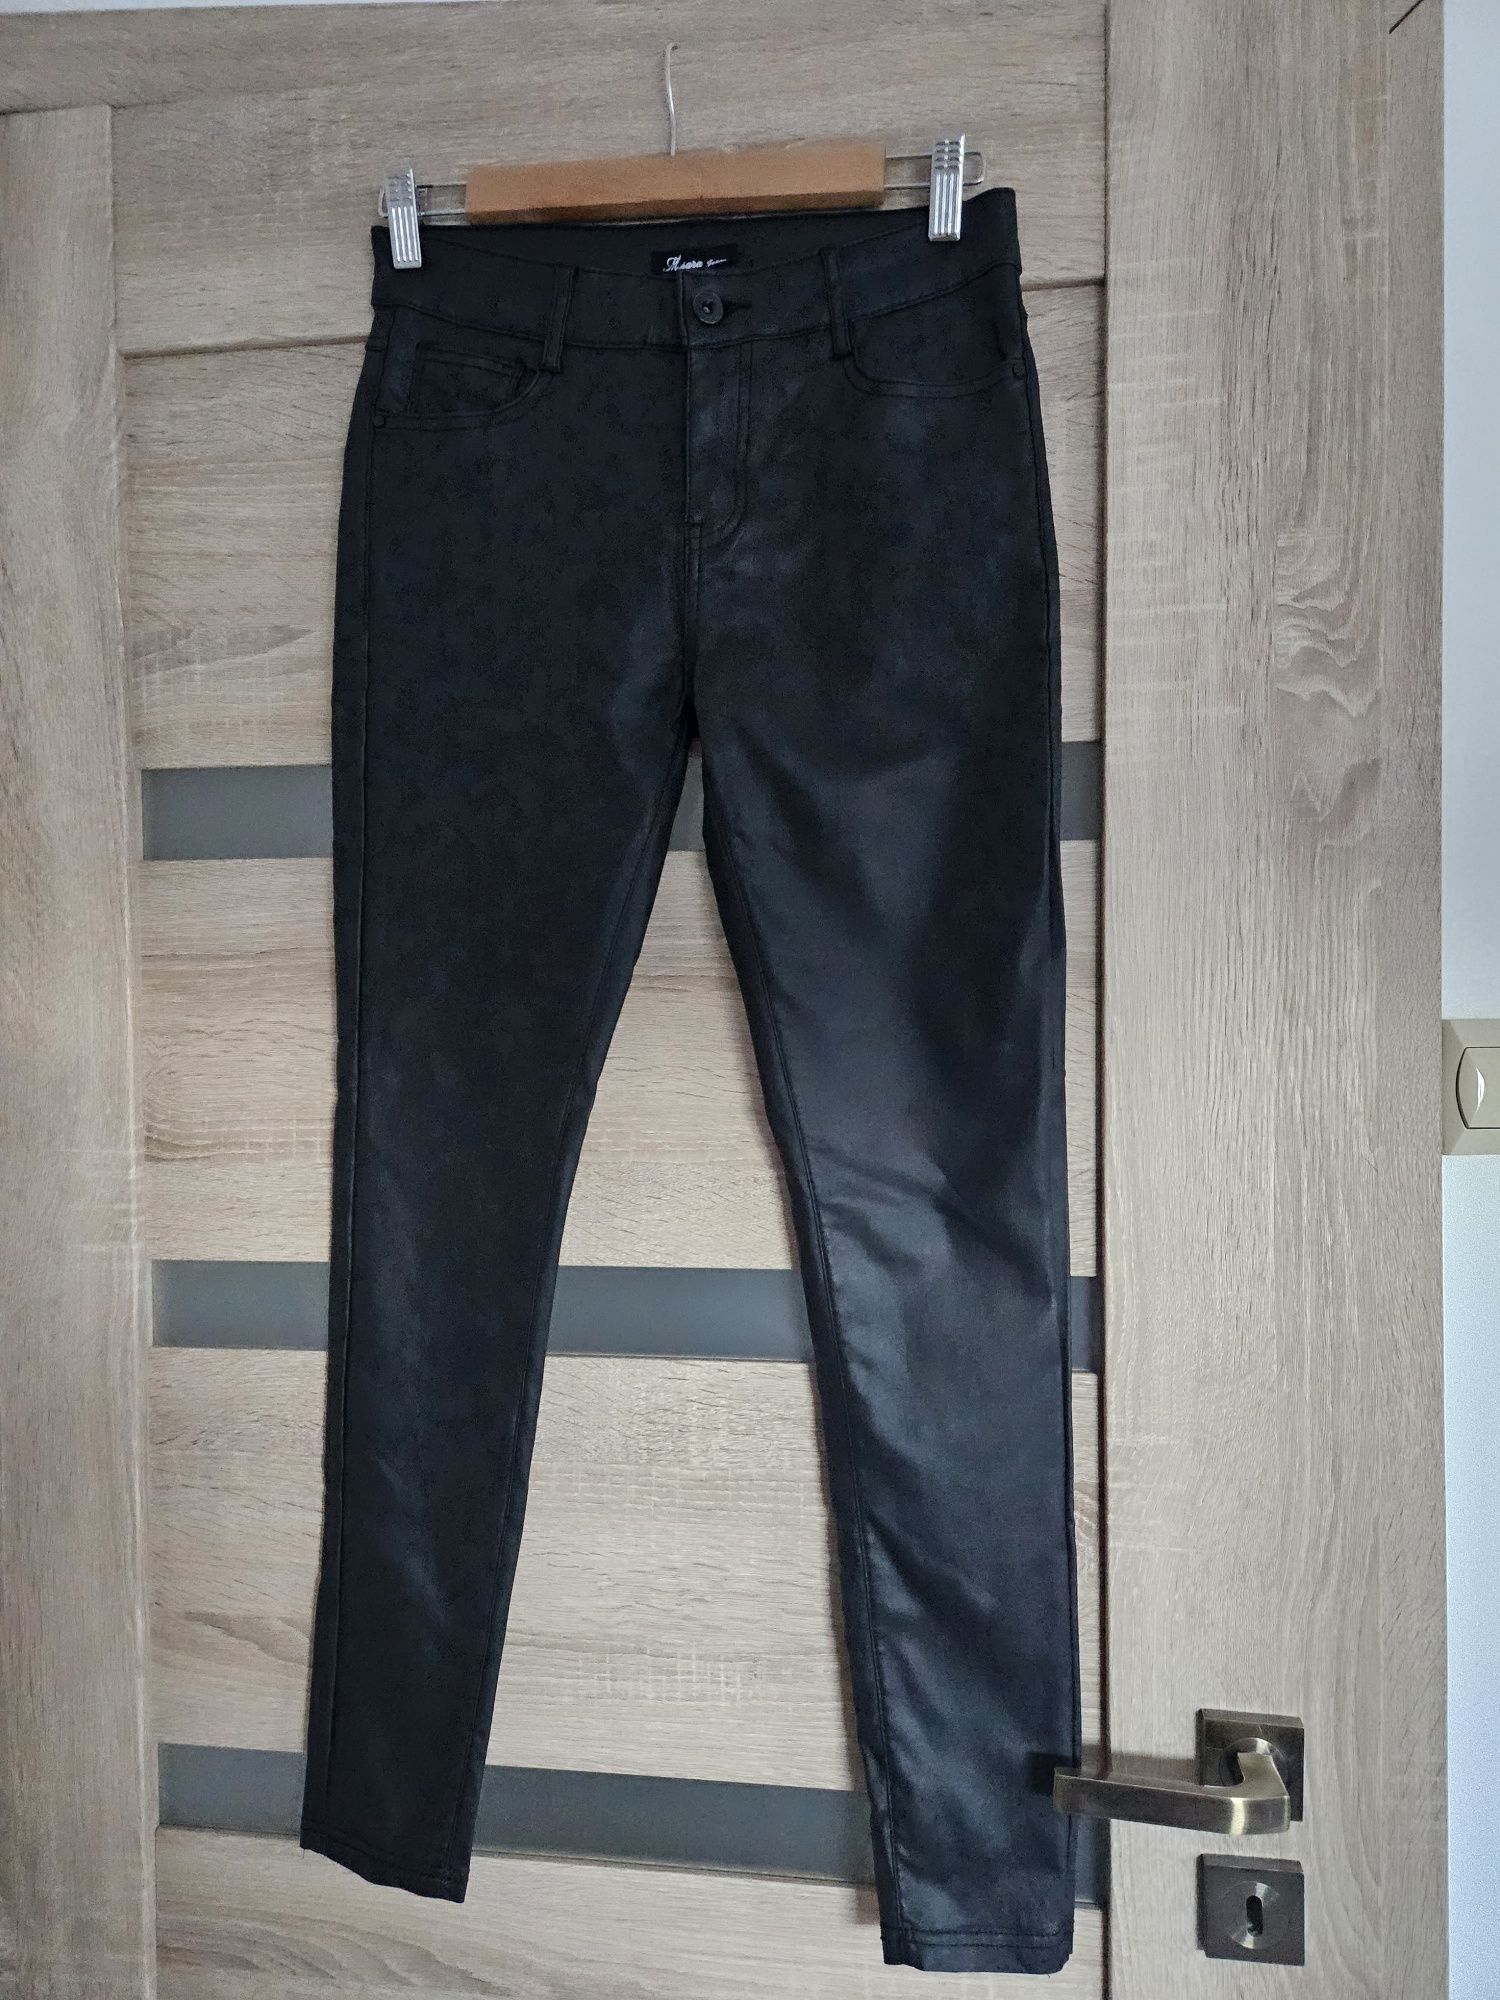 Spodnie czarne skórzane rozmiar 29